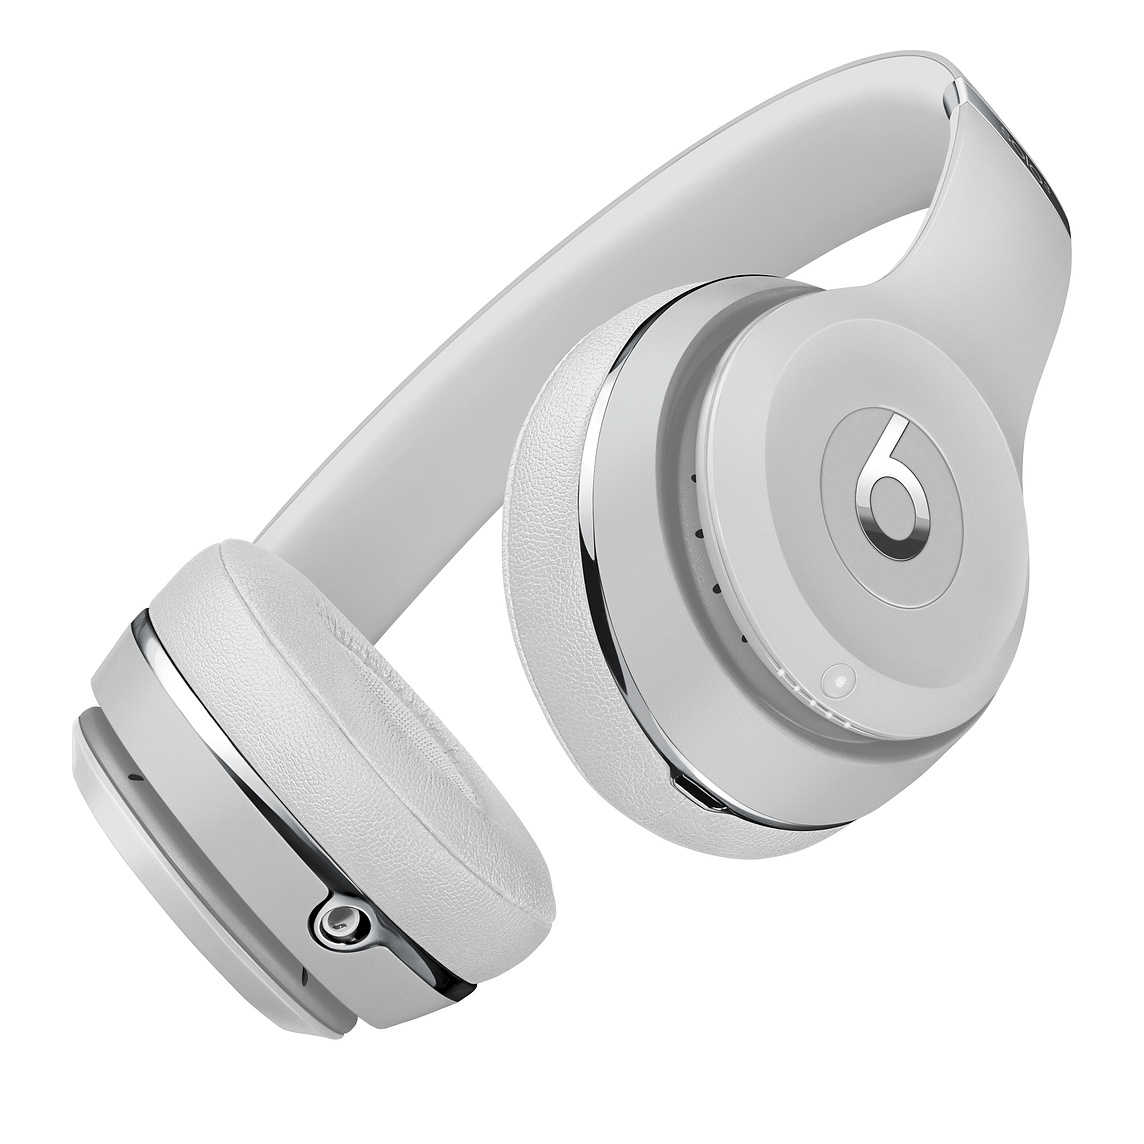 Beats】Solo3 Wireless 緞銀色藍牙無線耳罩式耳機☆免運